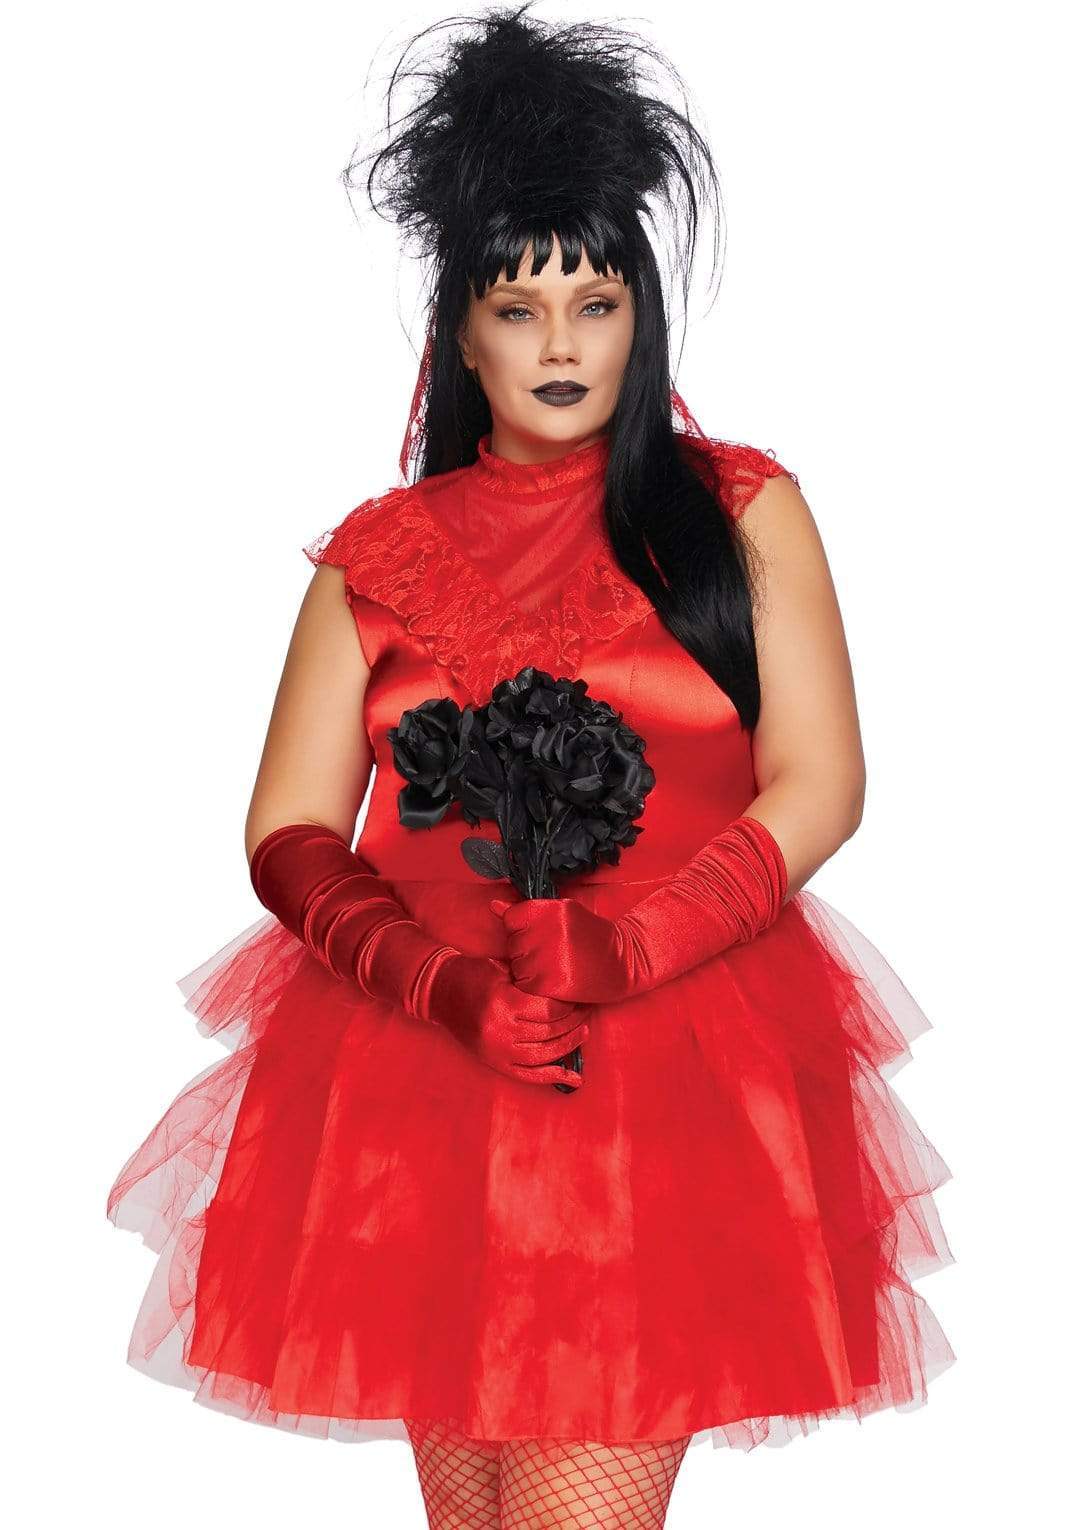 Red Beetle Bride Costume - Women's Plus